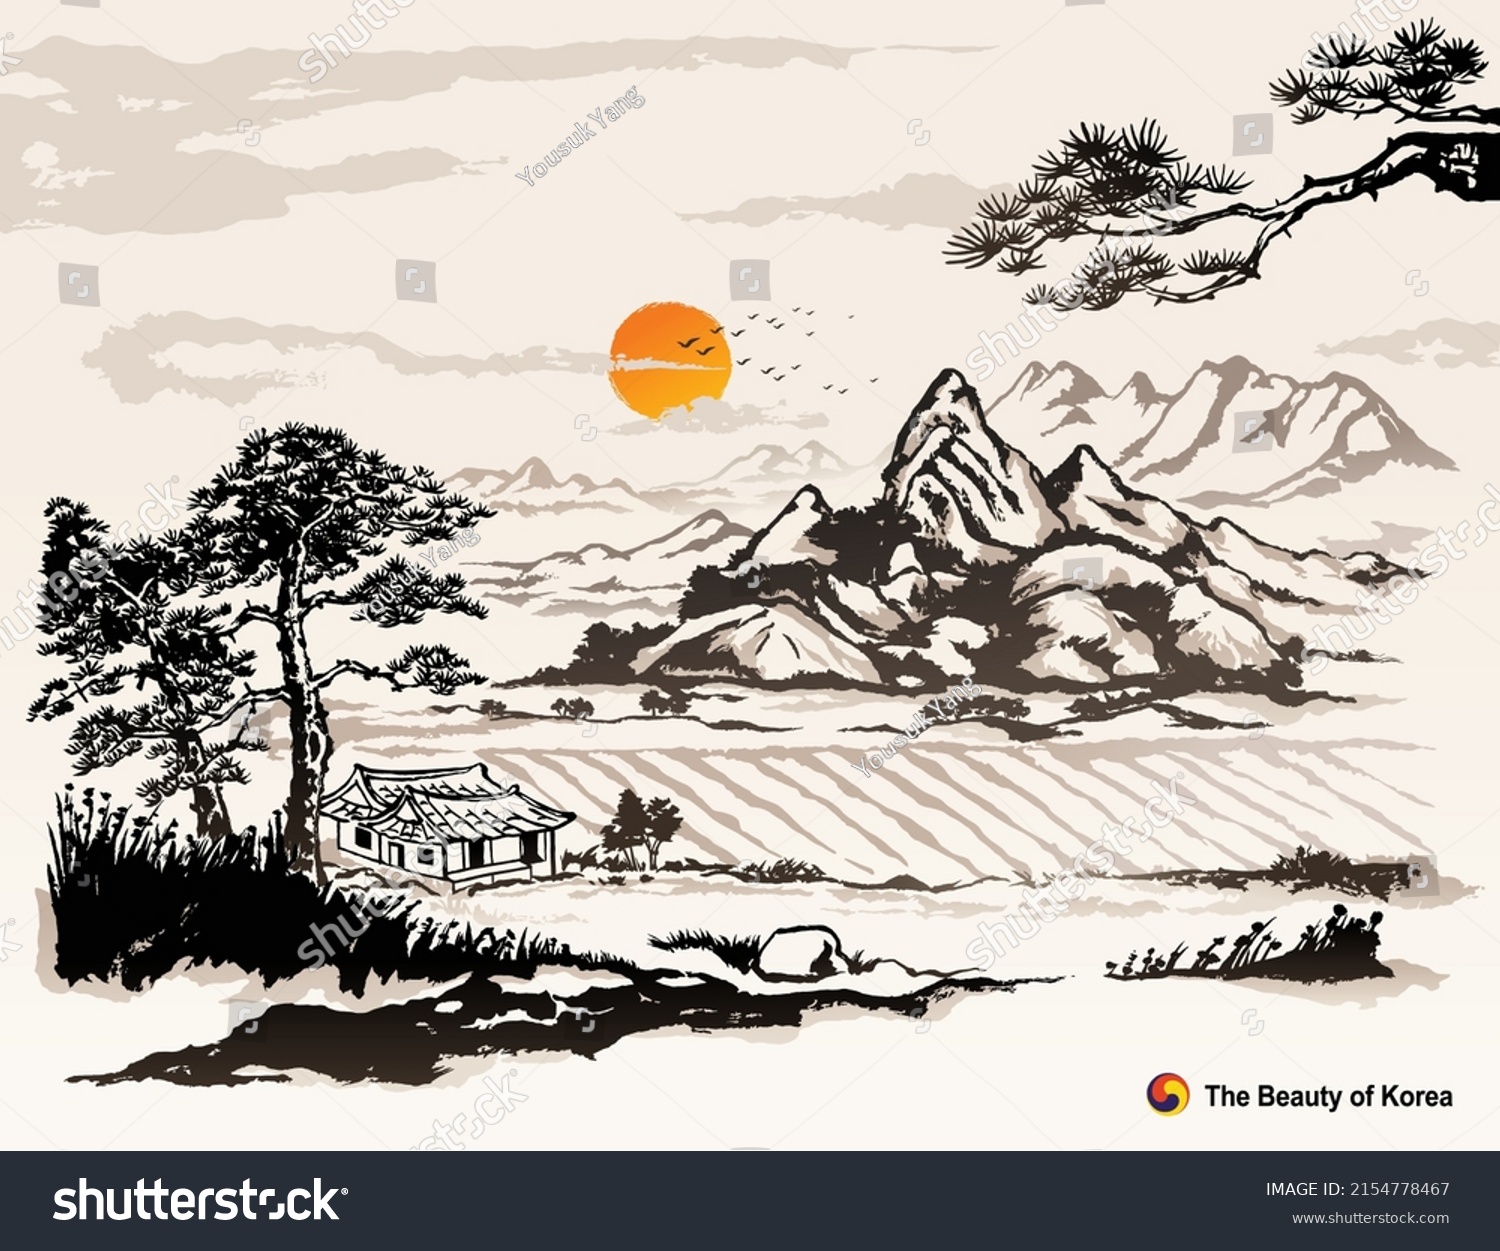 Beautiful Korea, mountains, pine trees, hanok, rural nature landscape, ink painting, Korean traditional painting vector illustration. #2154778467